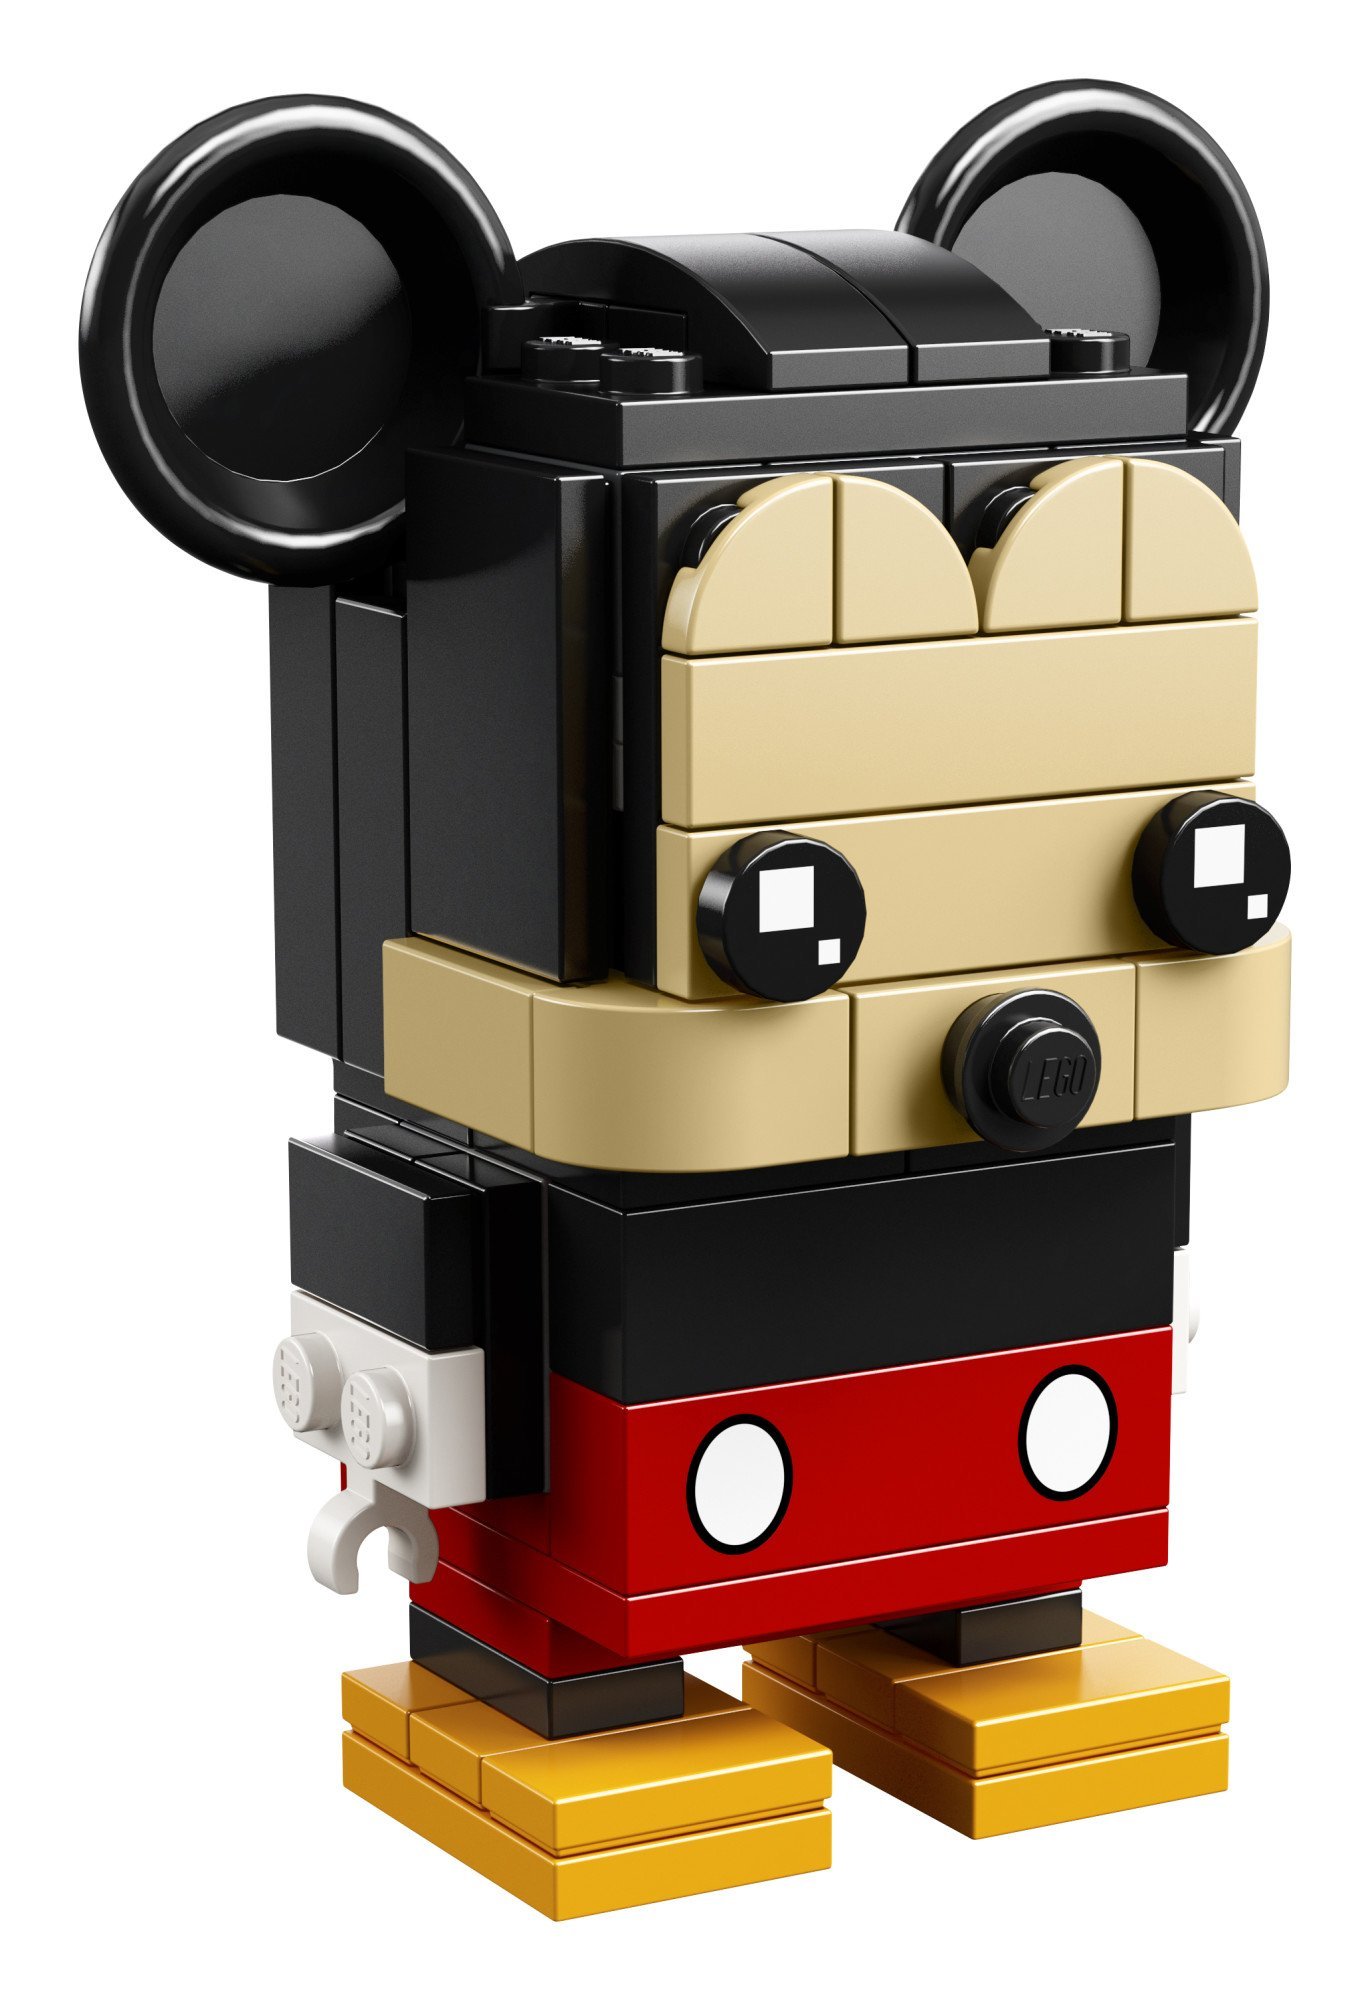 LEGO 6225330 Brickheadz Mickey Mouse 41624 Building Kit (109 Piece), Multicolor